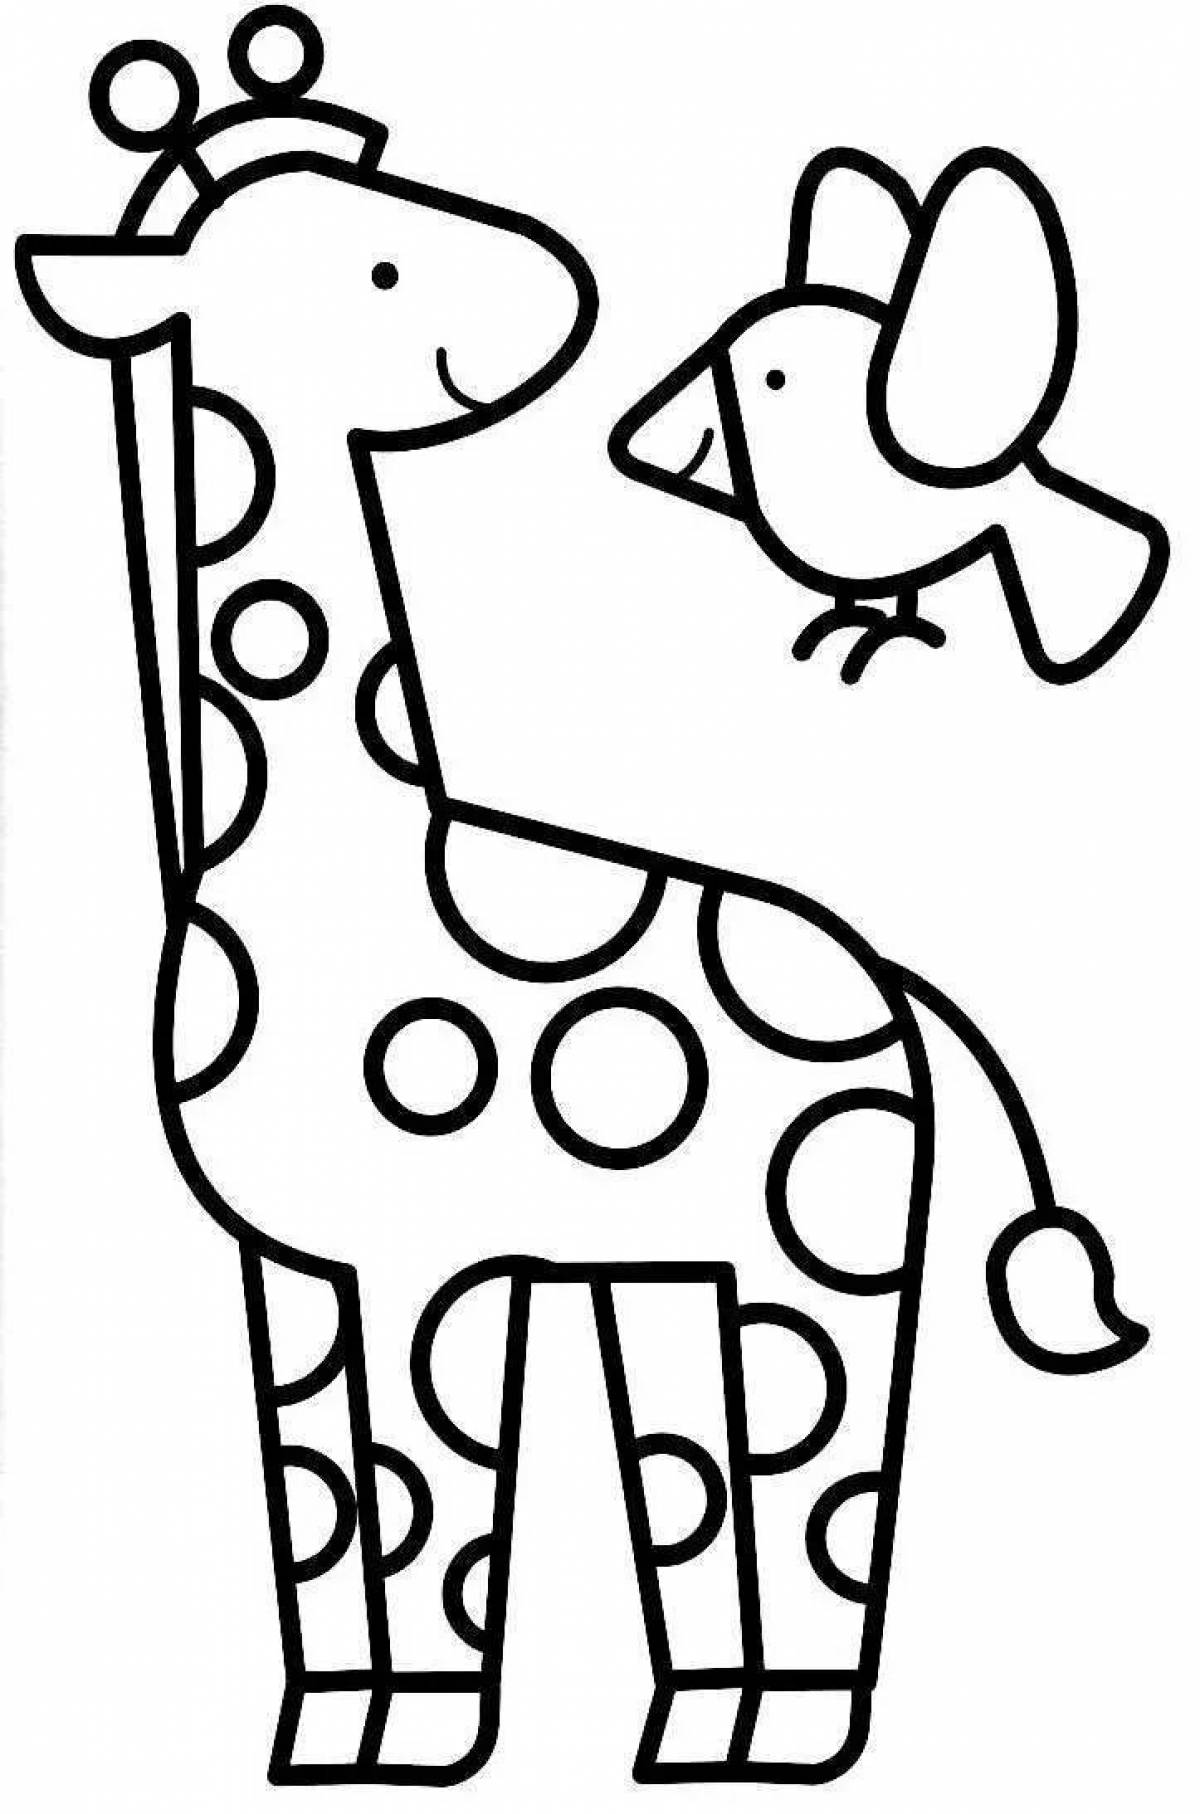 Zany giraffe drawing for kids